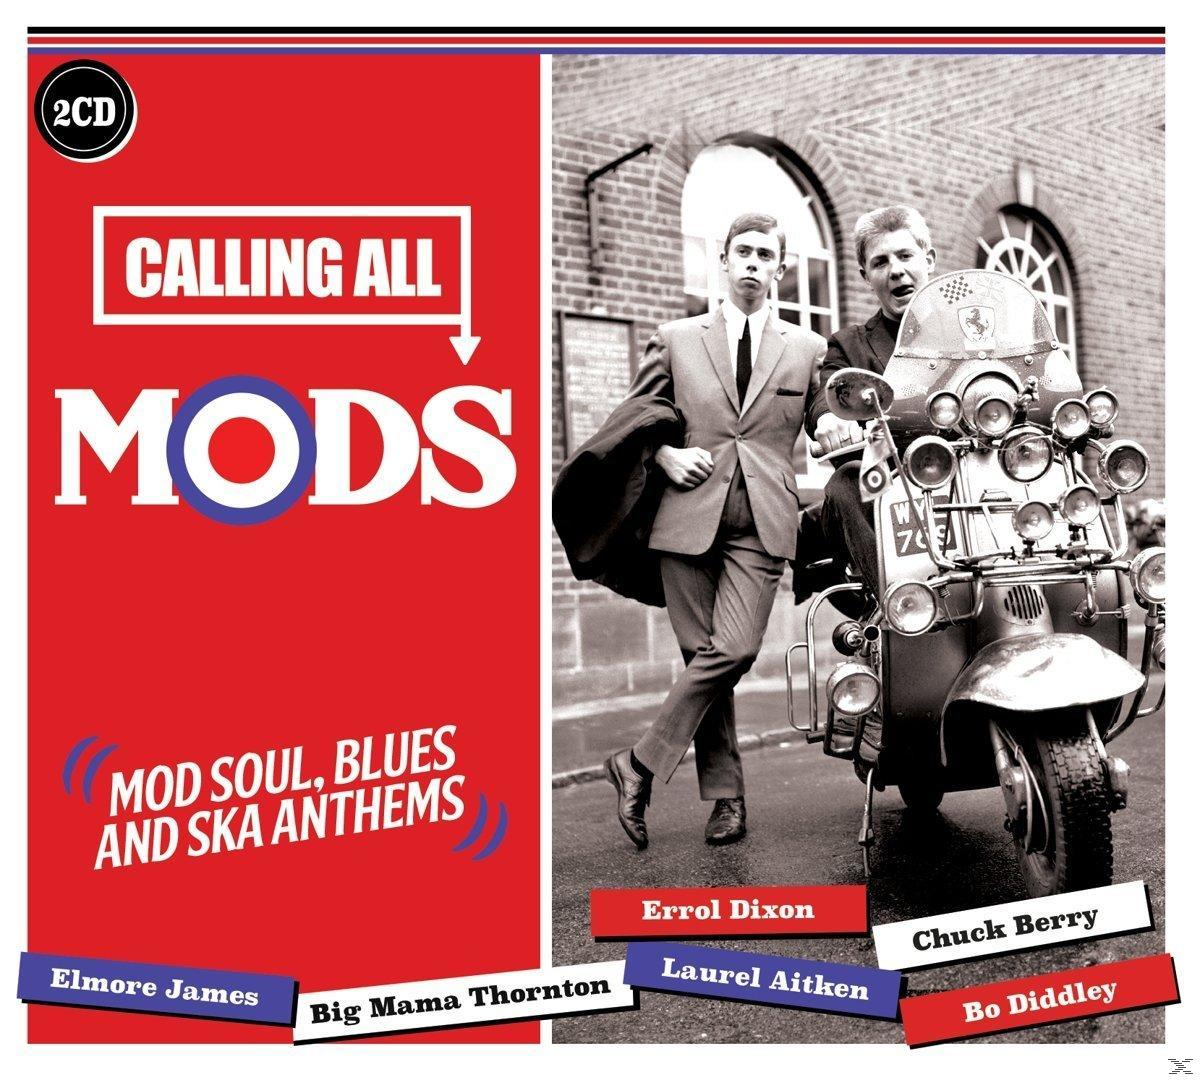 All - VARIOUS Mods (CD) Calling -